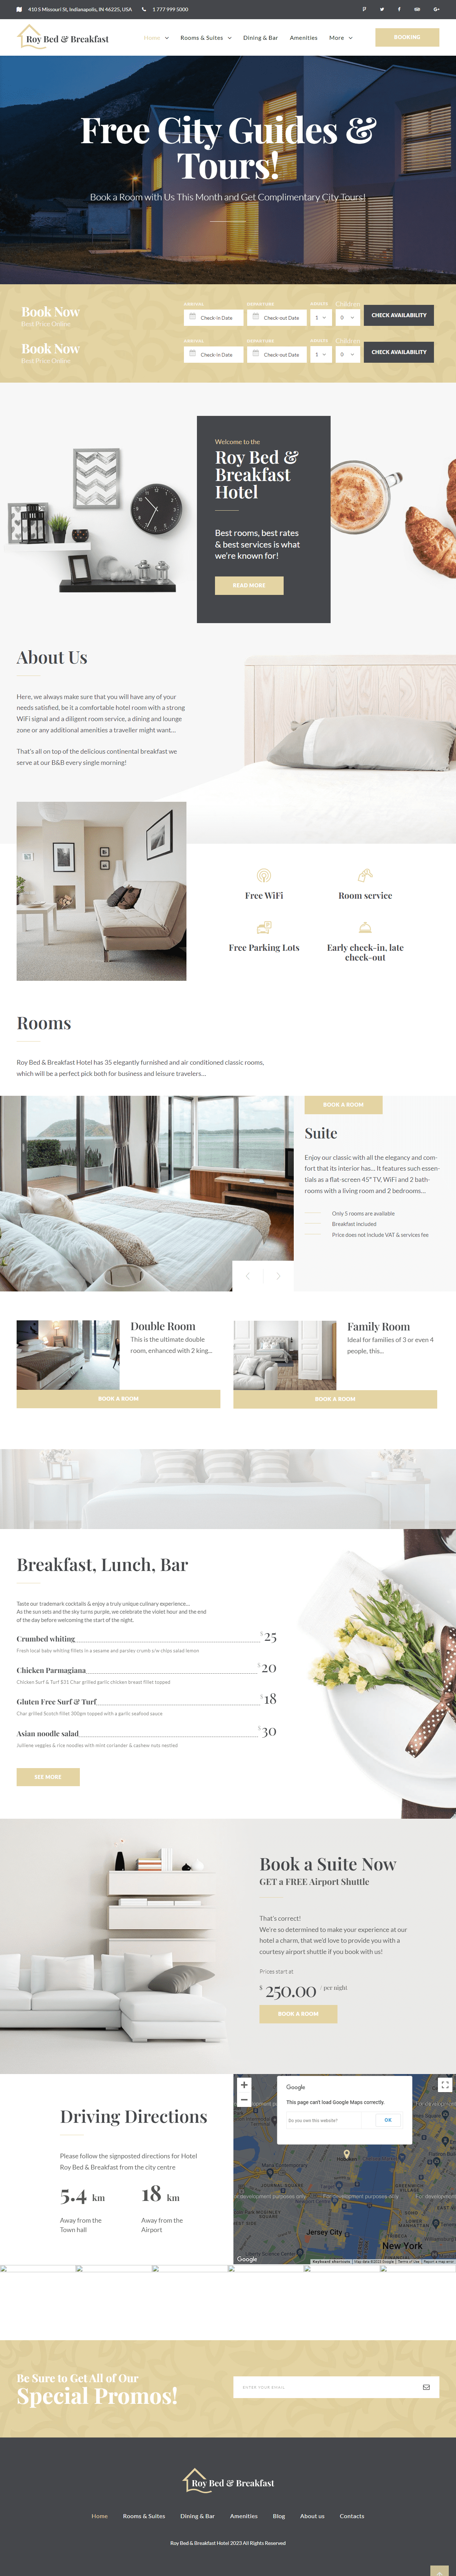 Hotels-website-template-1